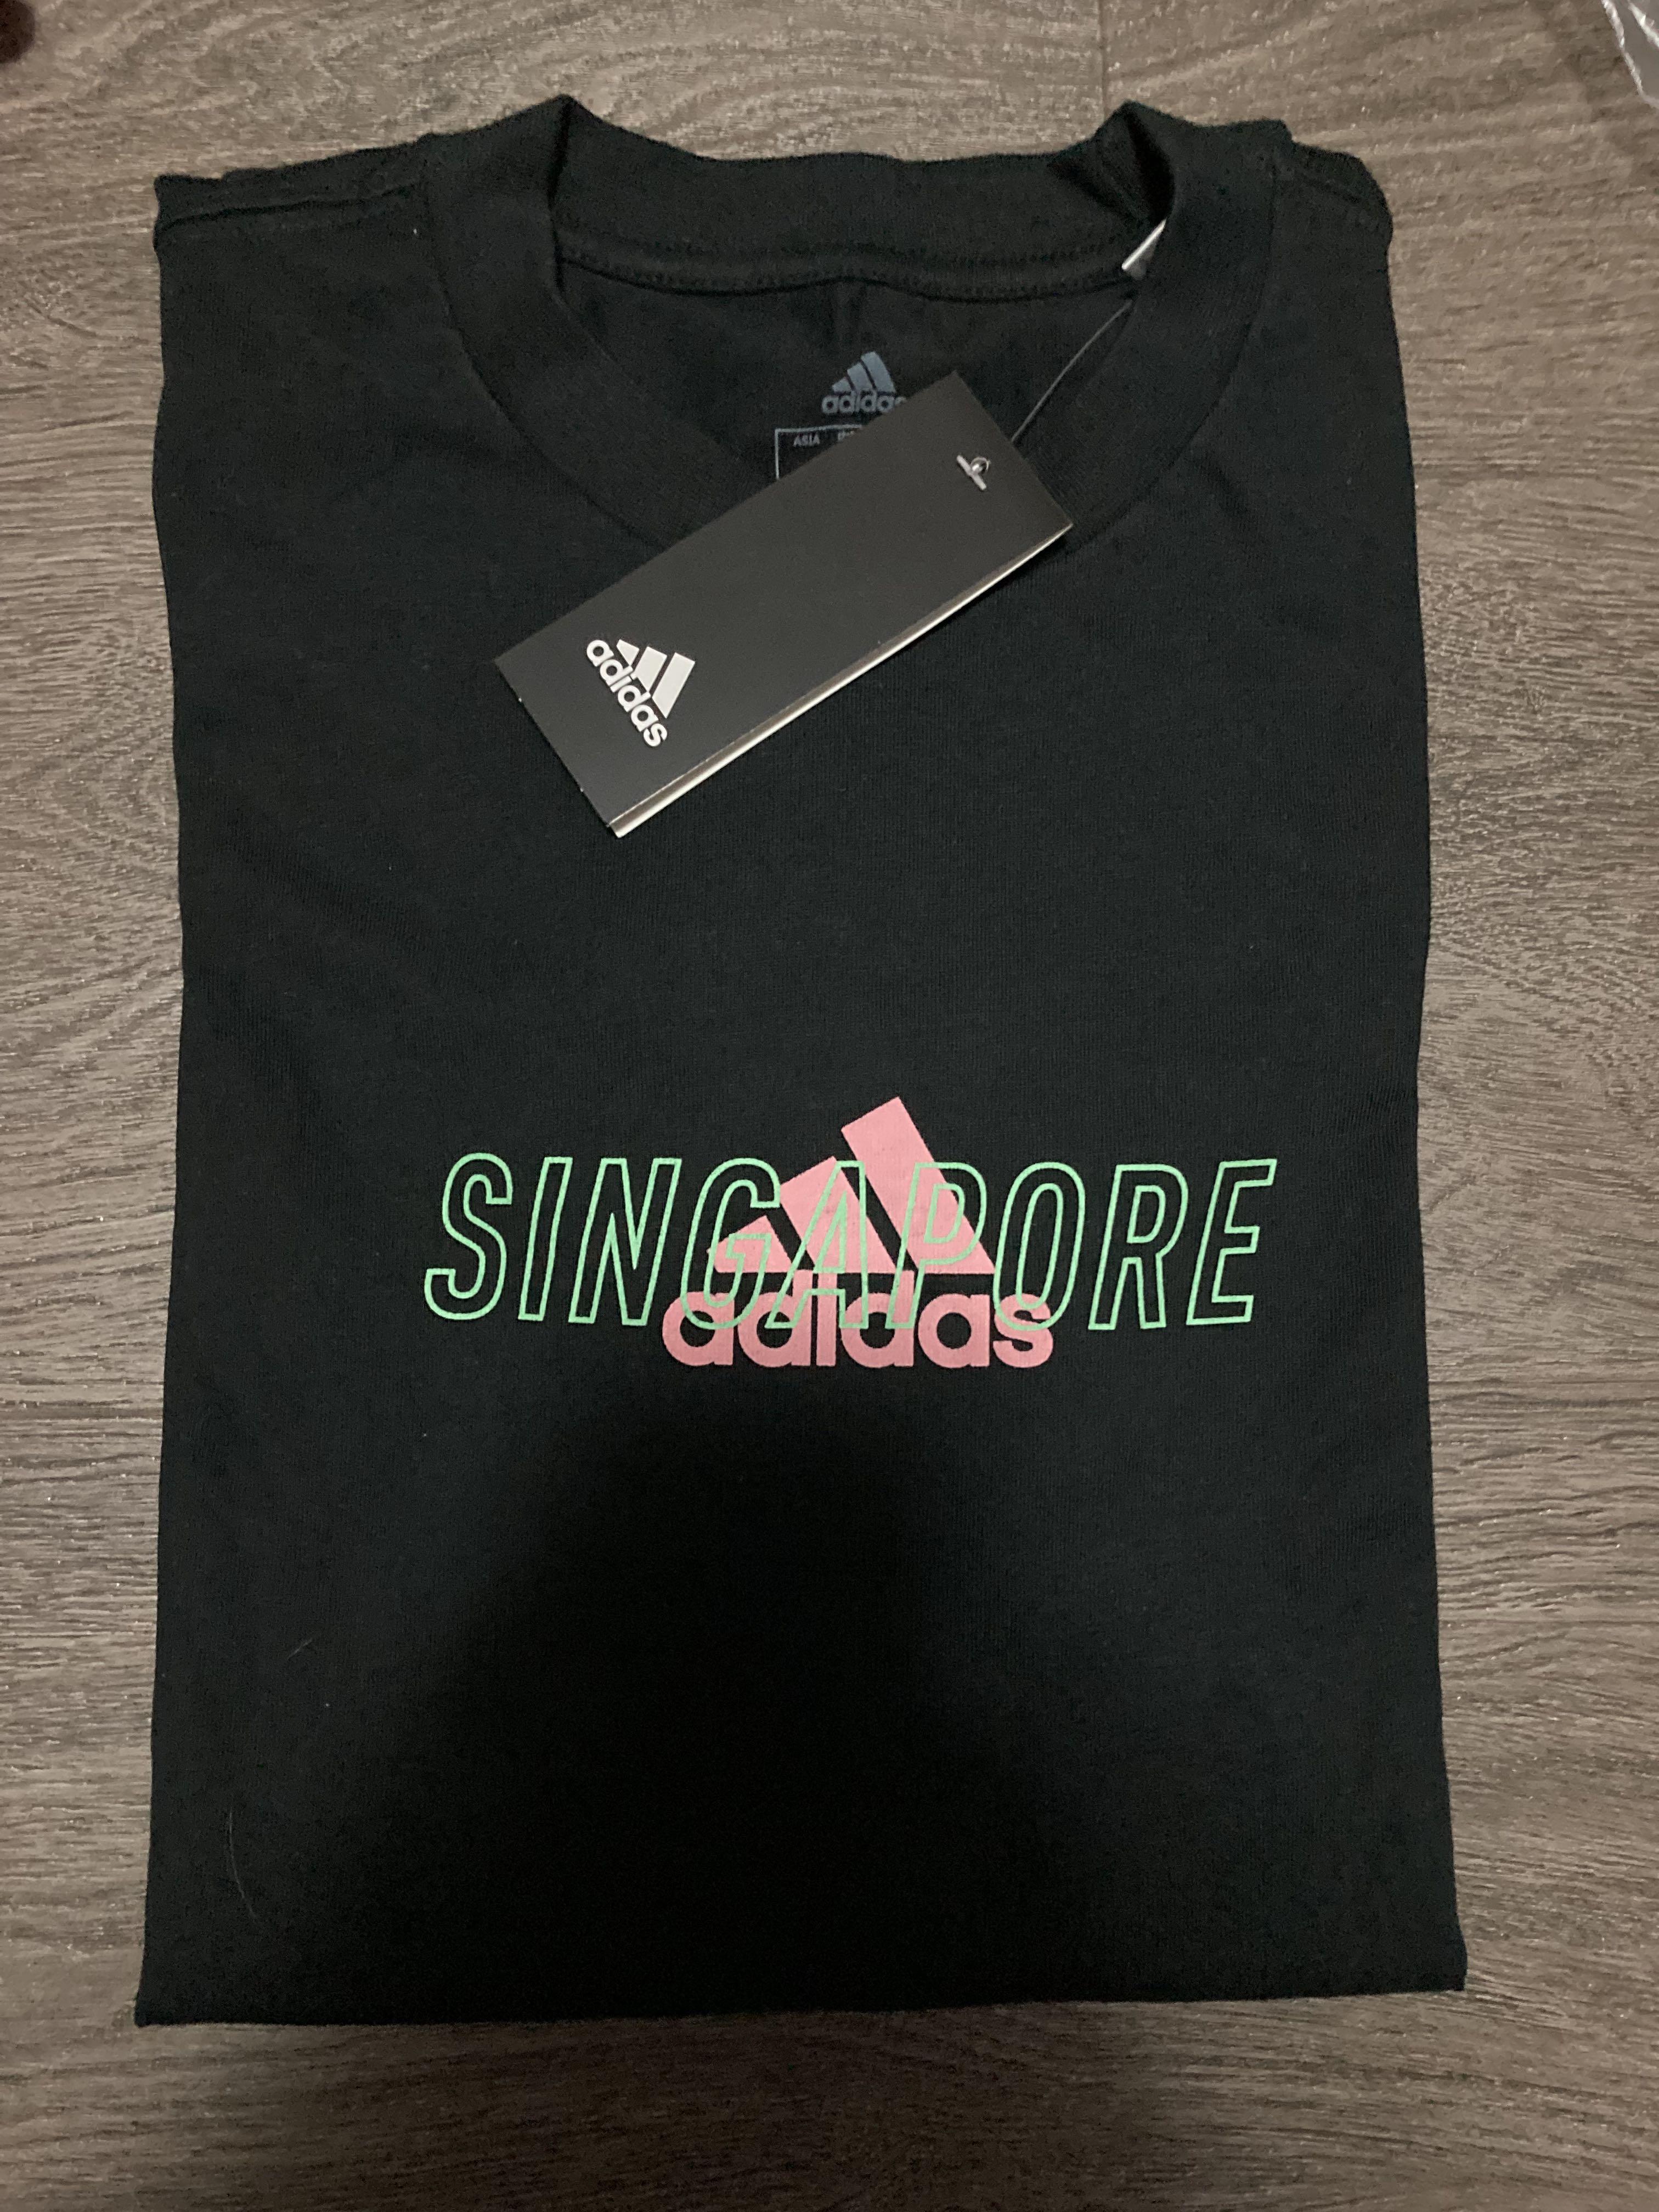 adidas shirt singapore